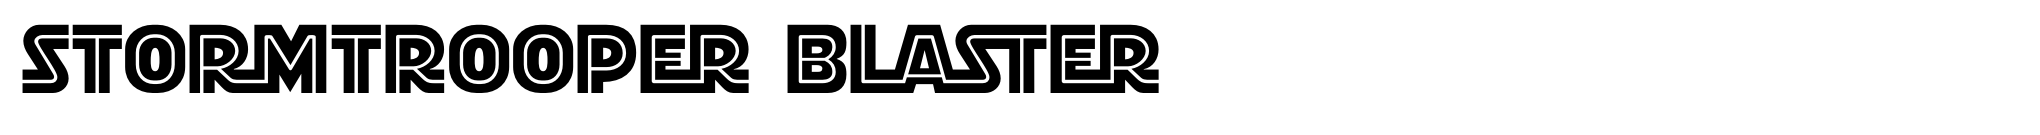 Stormtrooper Blaster image